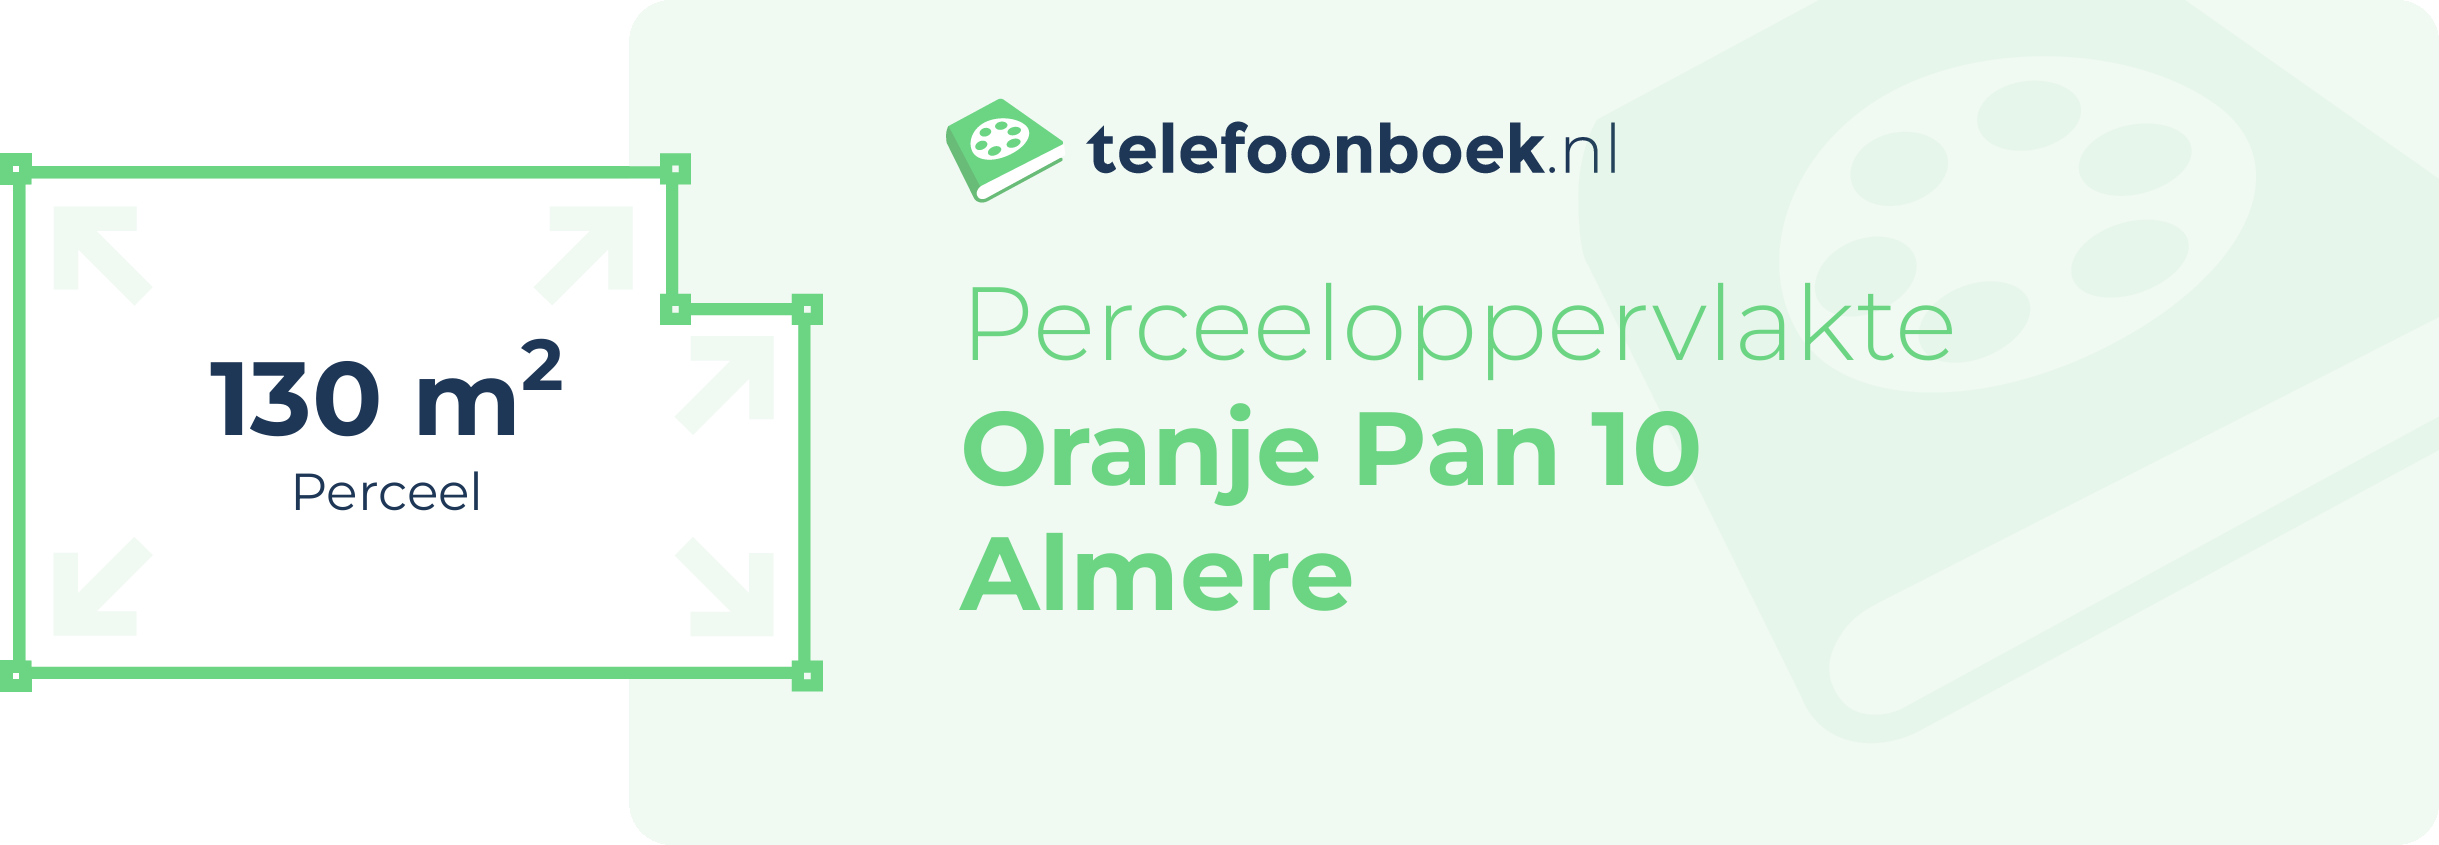 Perceeloppervlakte Oranje Pan 10 Almere